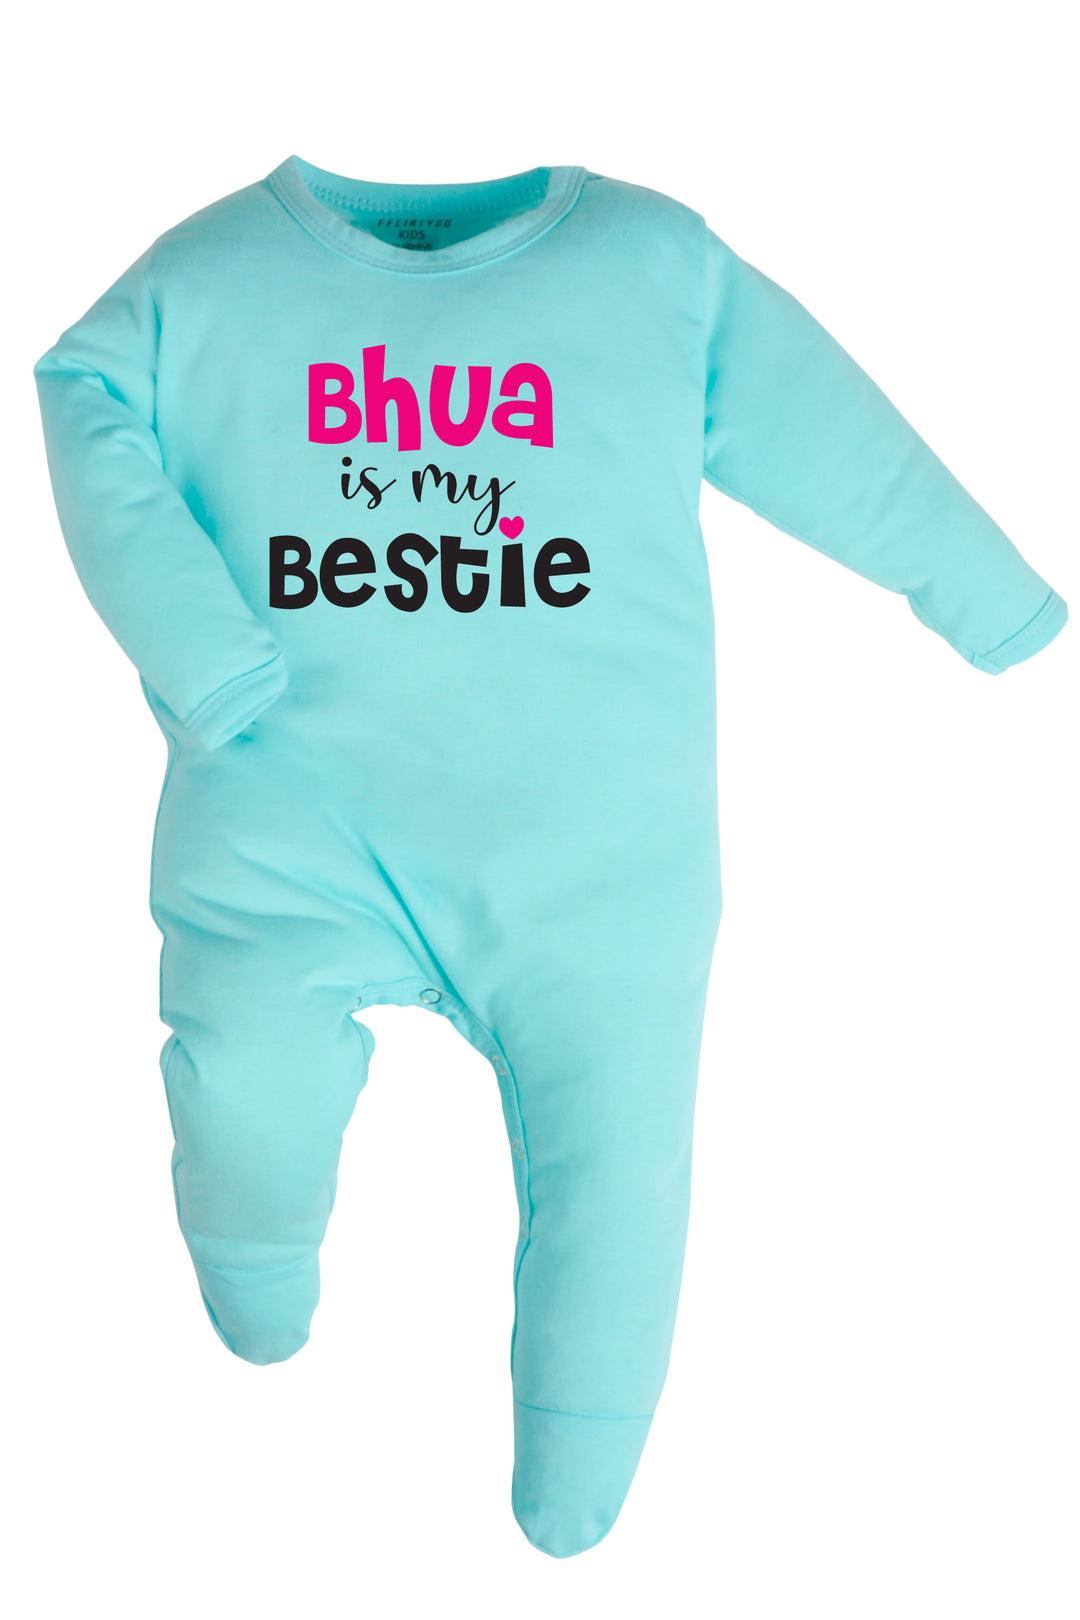 Bhua Is My Bestie Baby Romper | Onesies